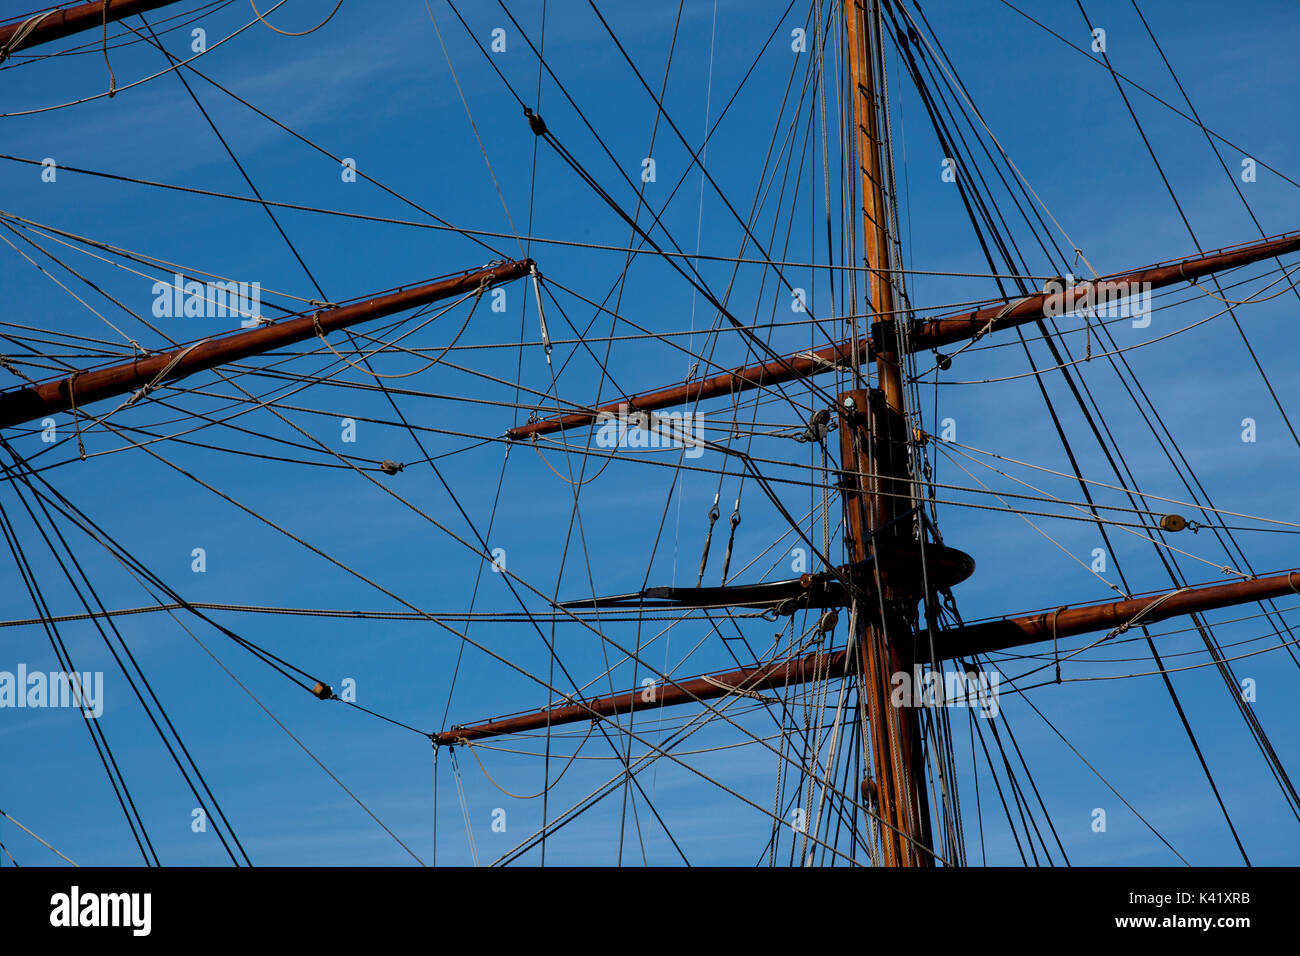 old sailing ship - detail Stock Photo